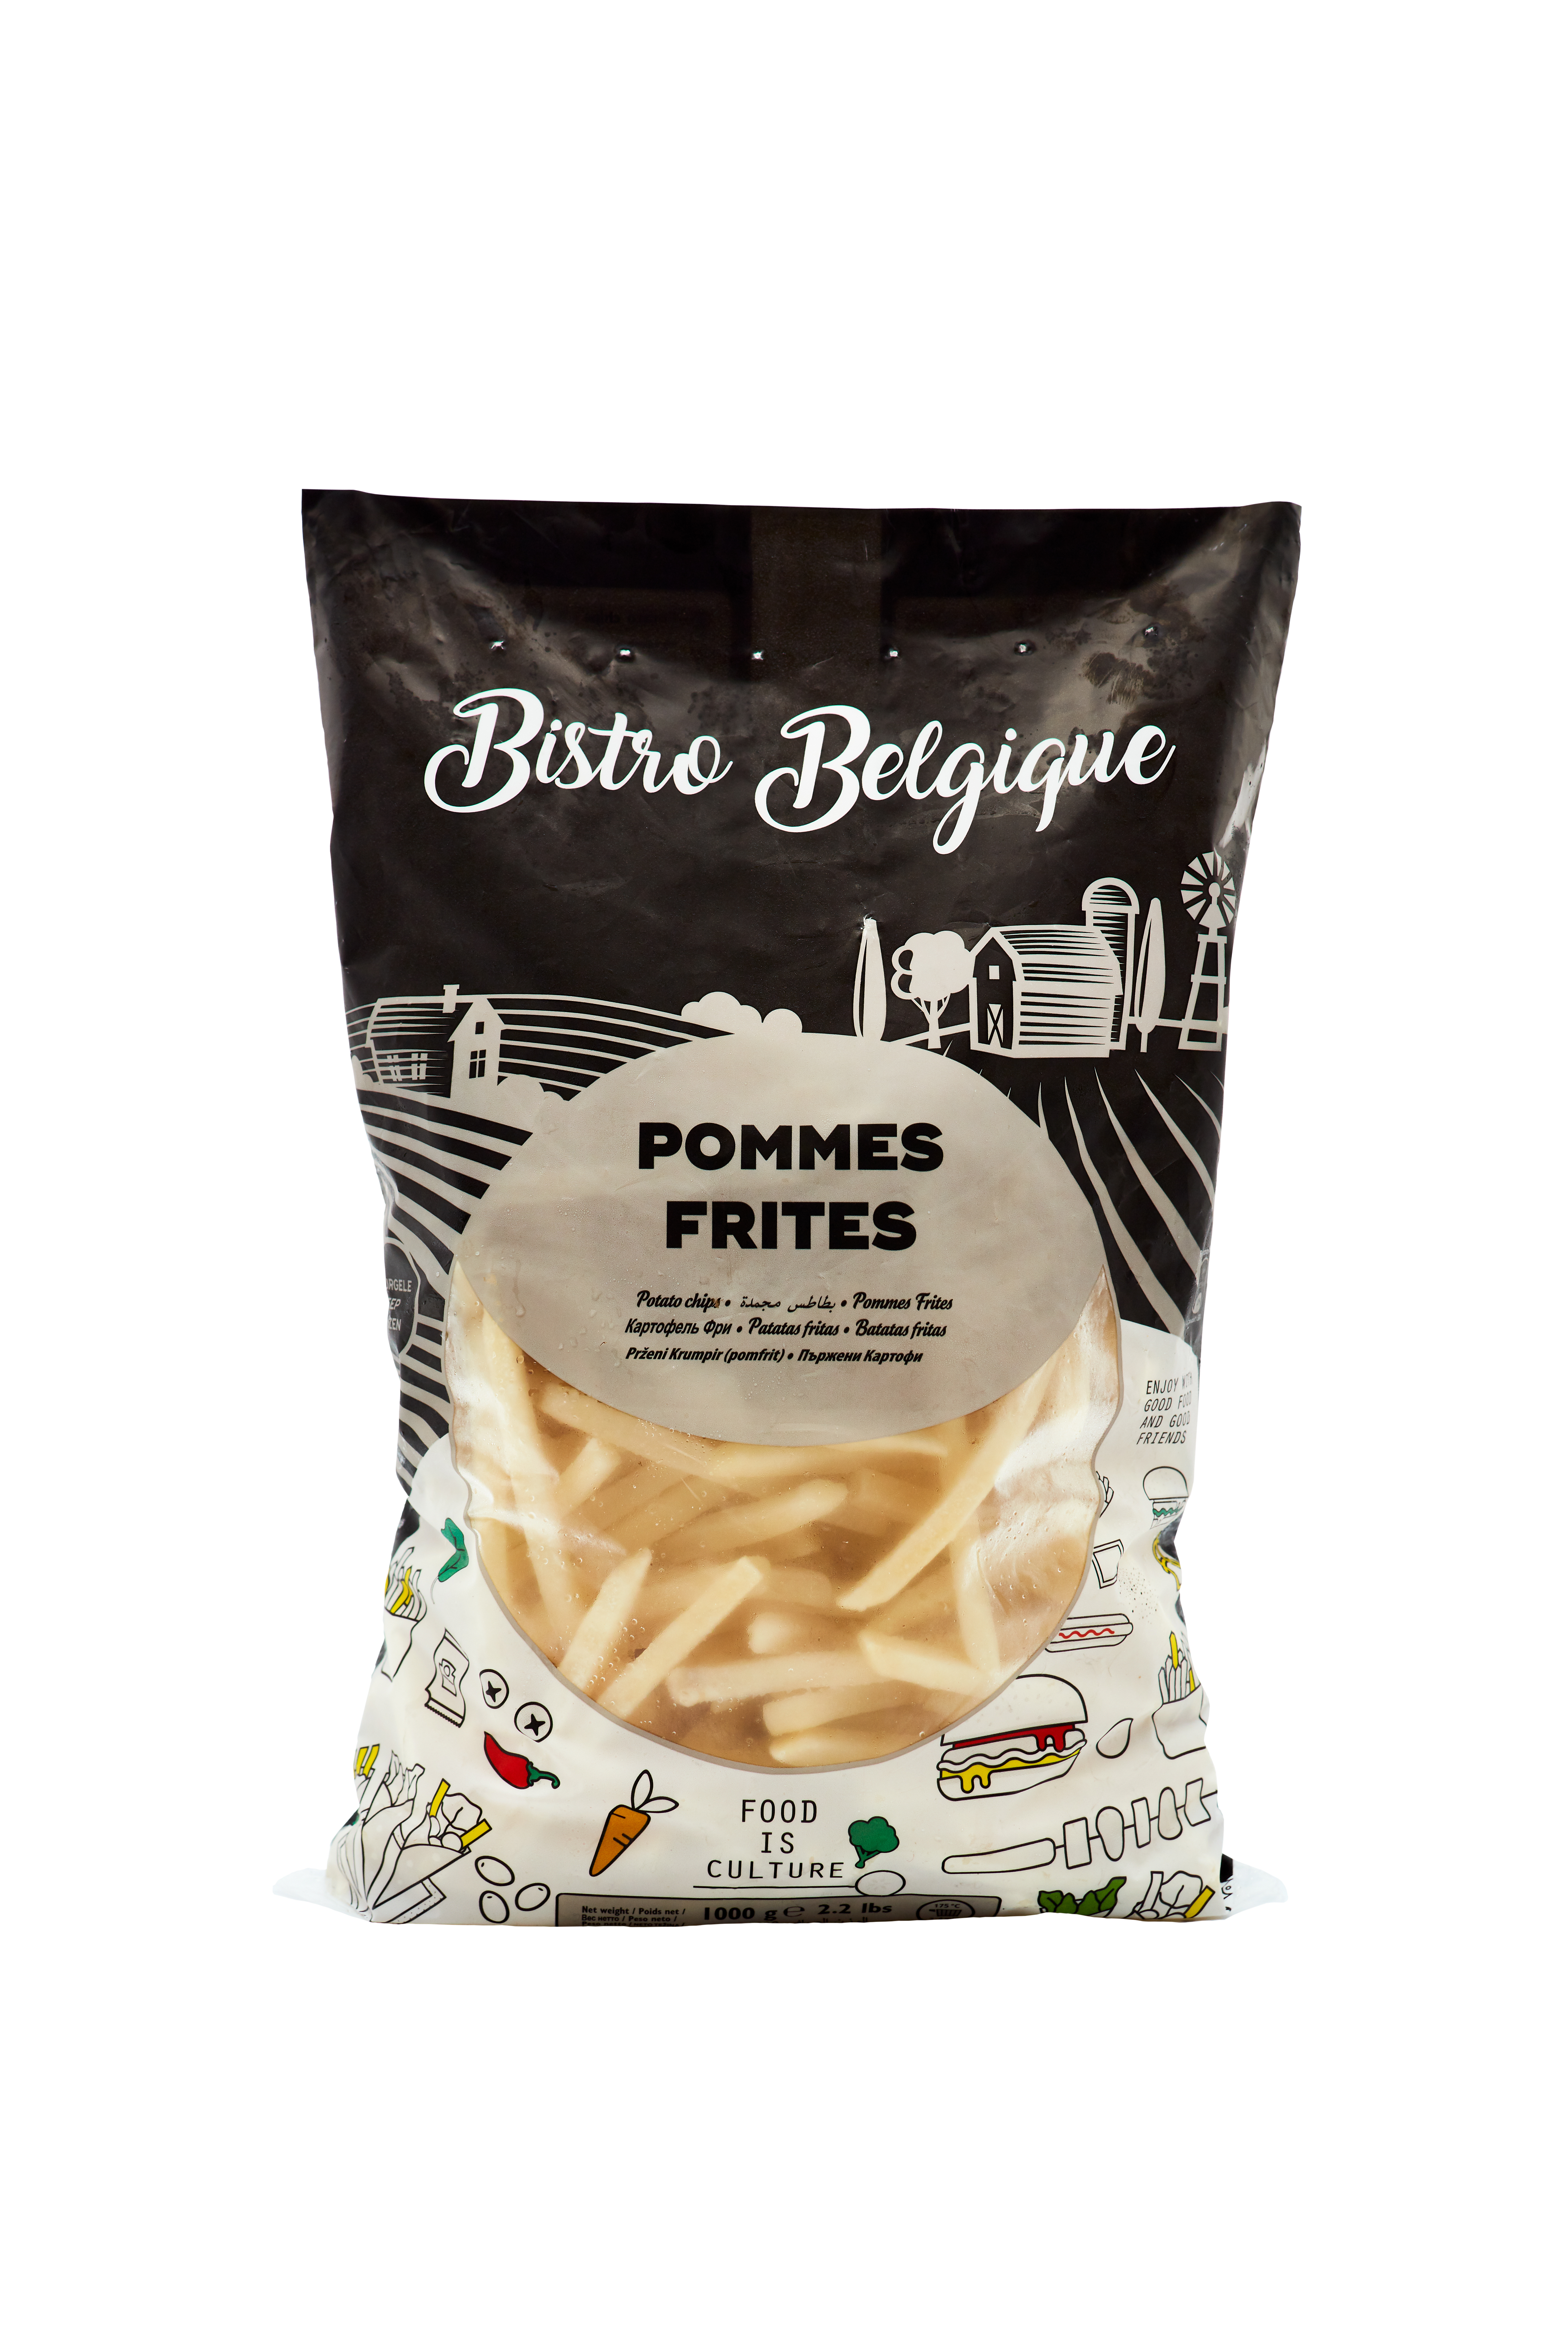 French fries 7x7mm premium crunch packaging Bistro Belgique brand